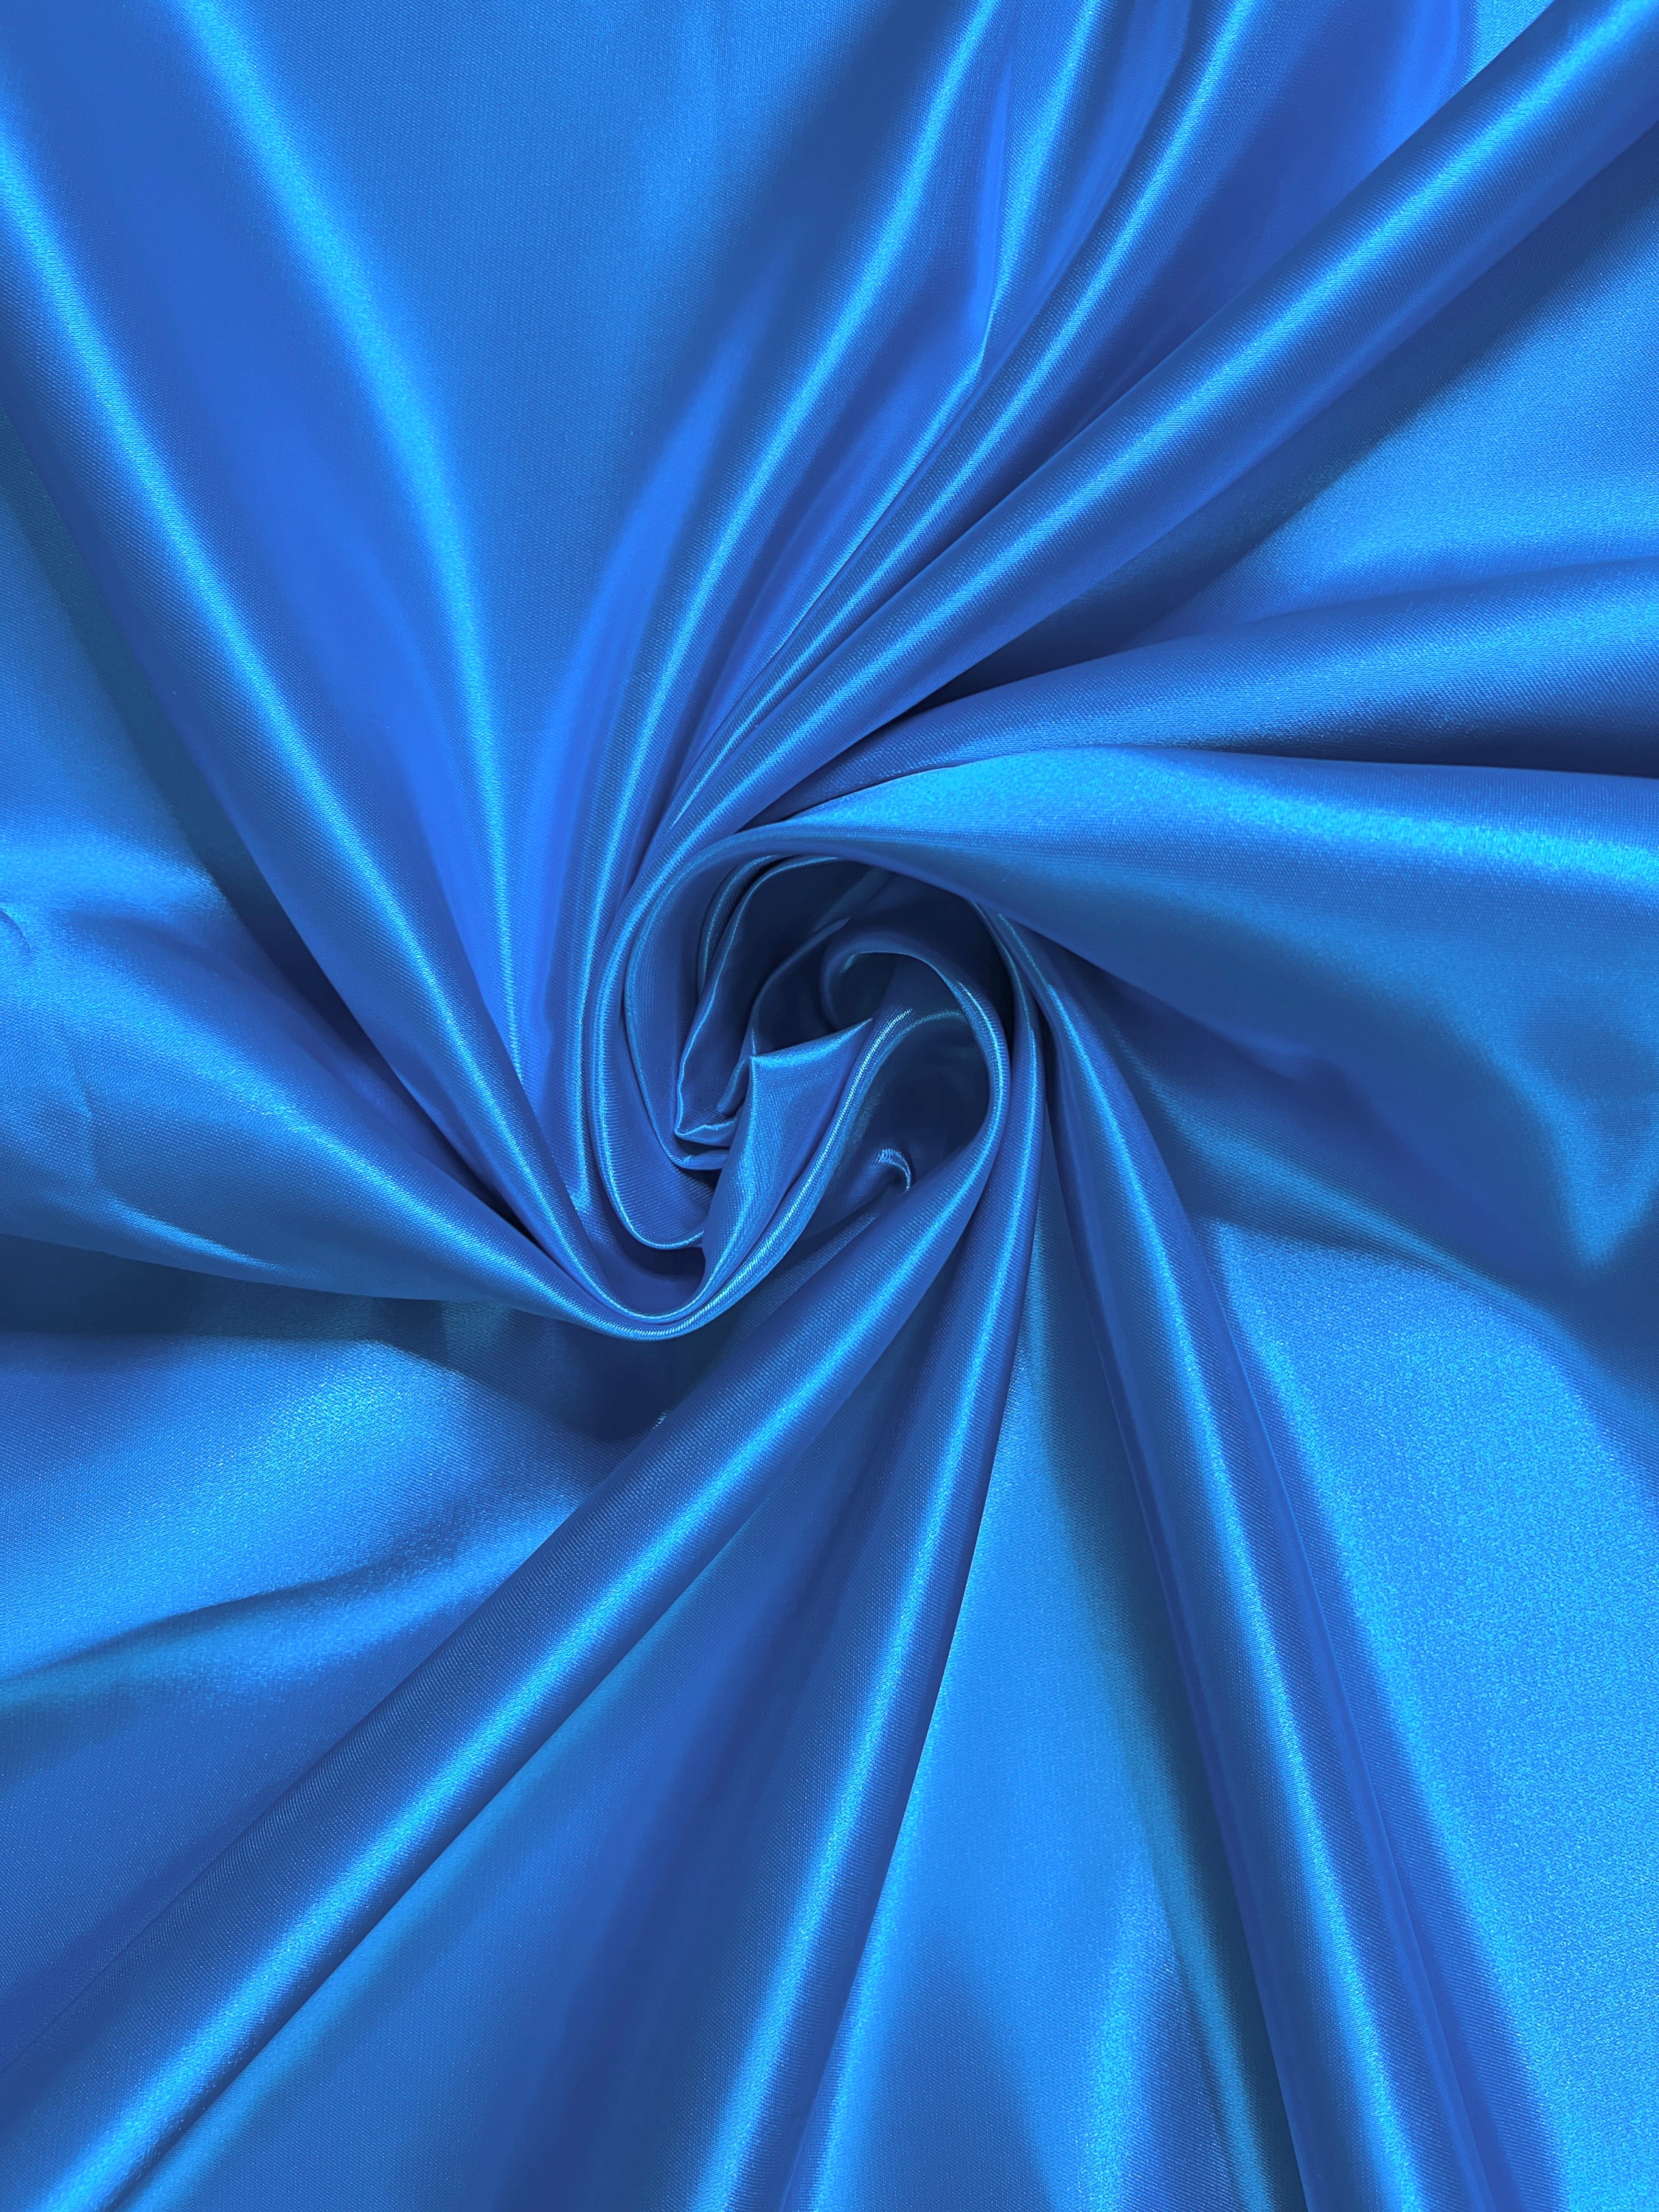 Solid Medium Weight Shiny Satin Fabric / Royal Blue Shop Solid